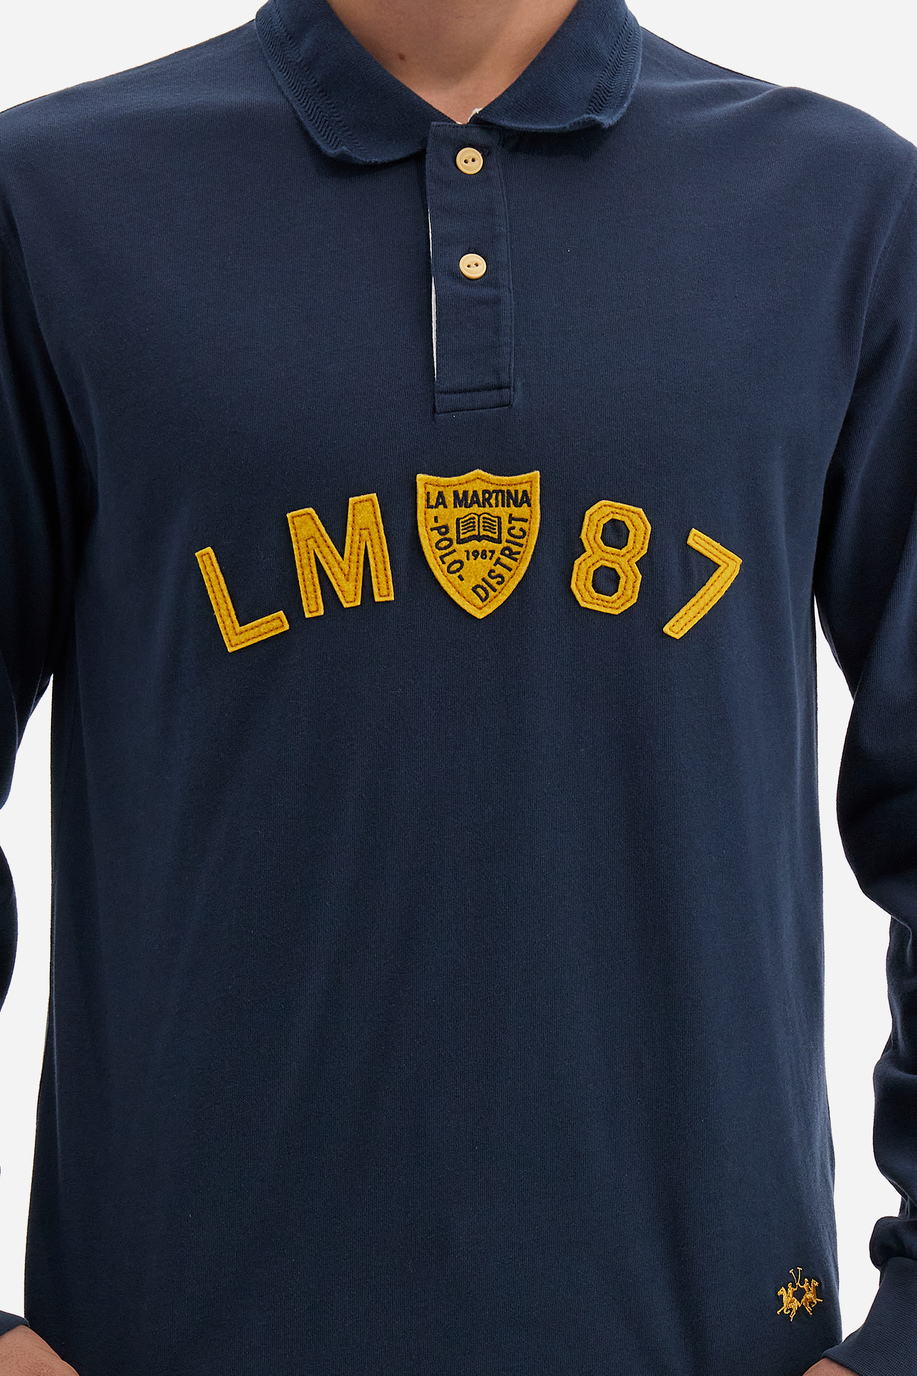 Polo Academy Herren-Langarm-Poloshirt mit kleinem Kontrastkragen-Logo - Vardis - Langarm | La Martina - Official Online Shop